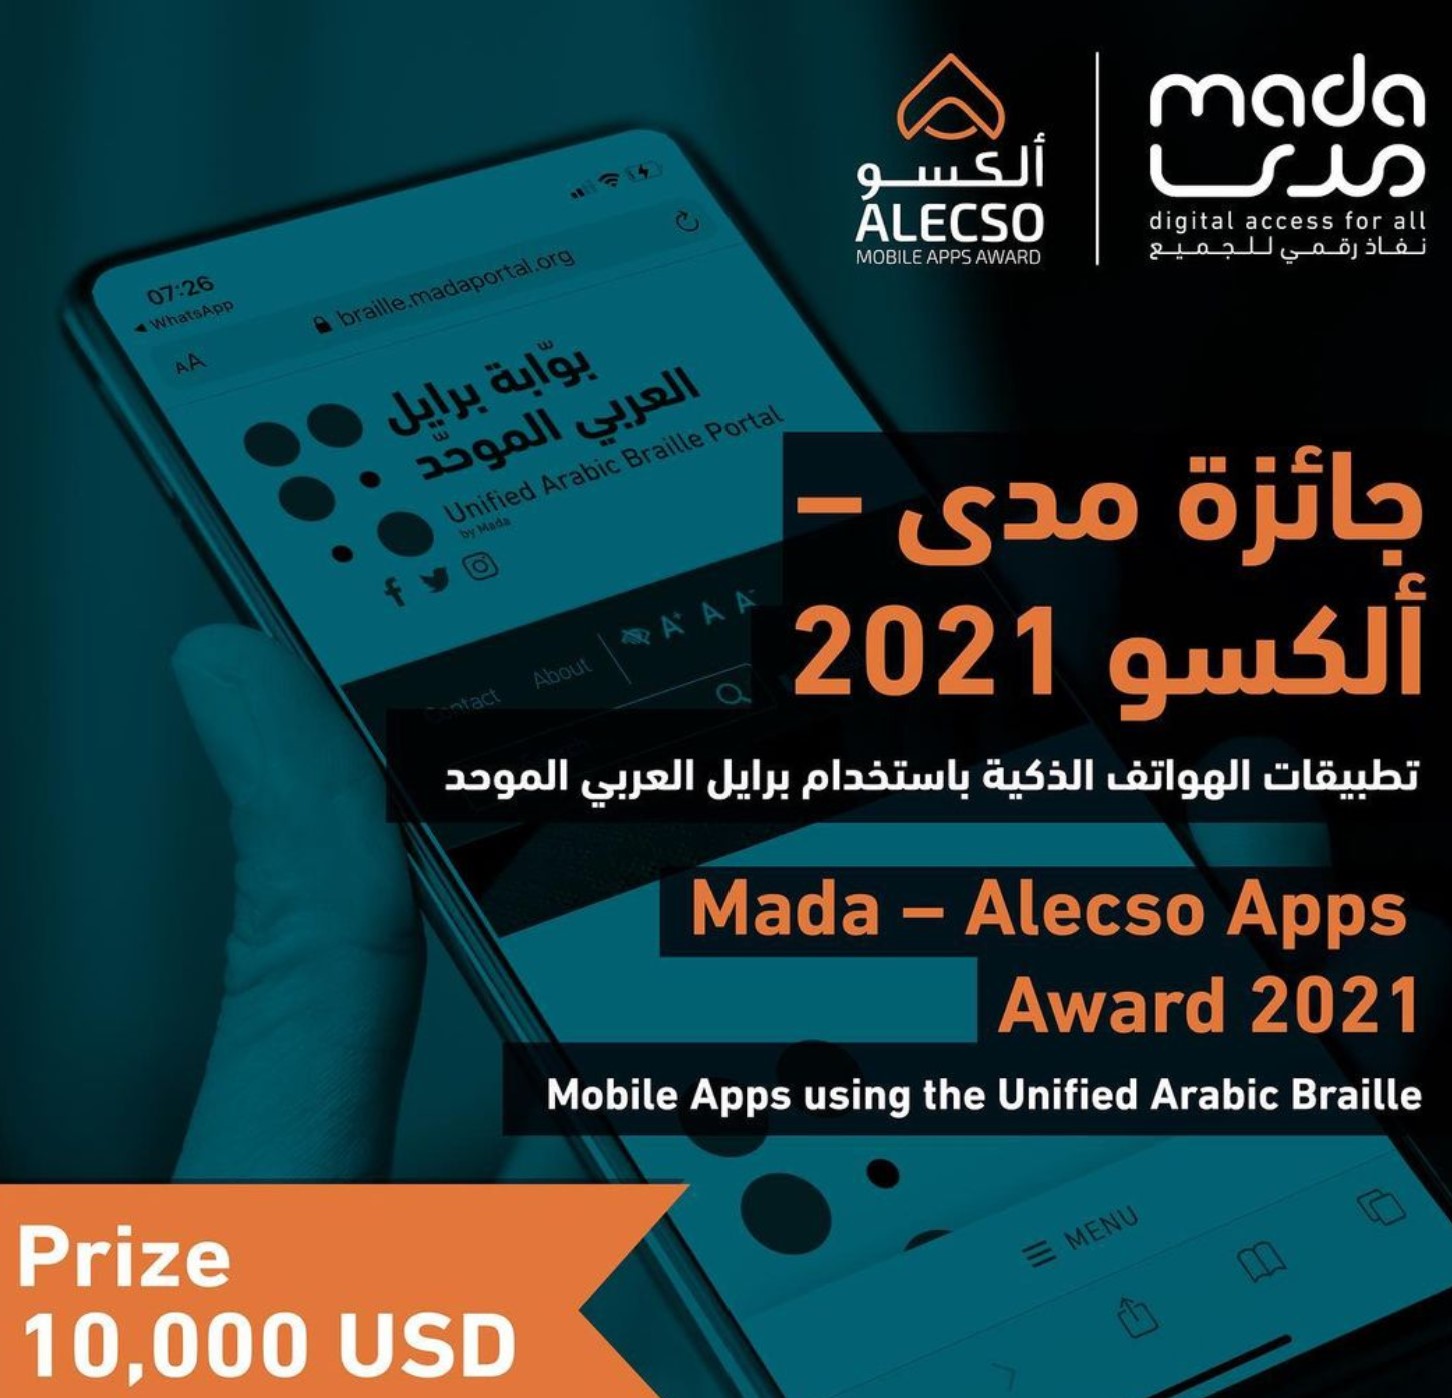 Mada-Alecso Awards 2021 – Call for Applications